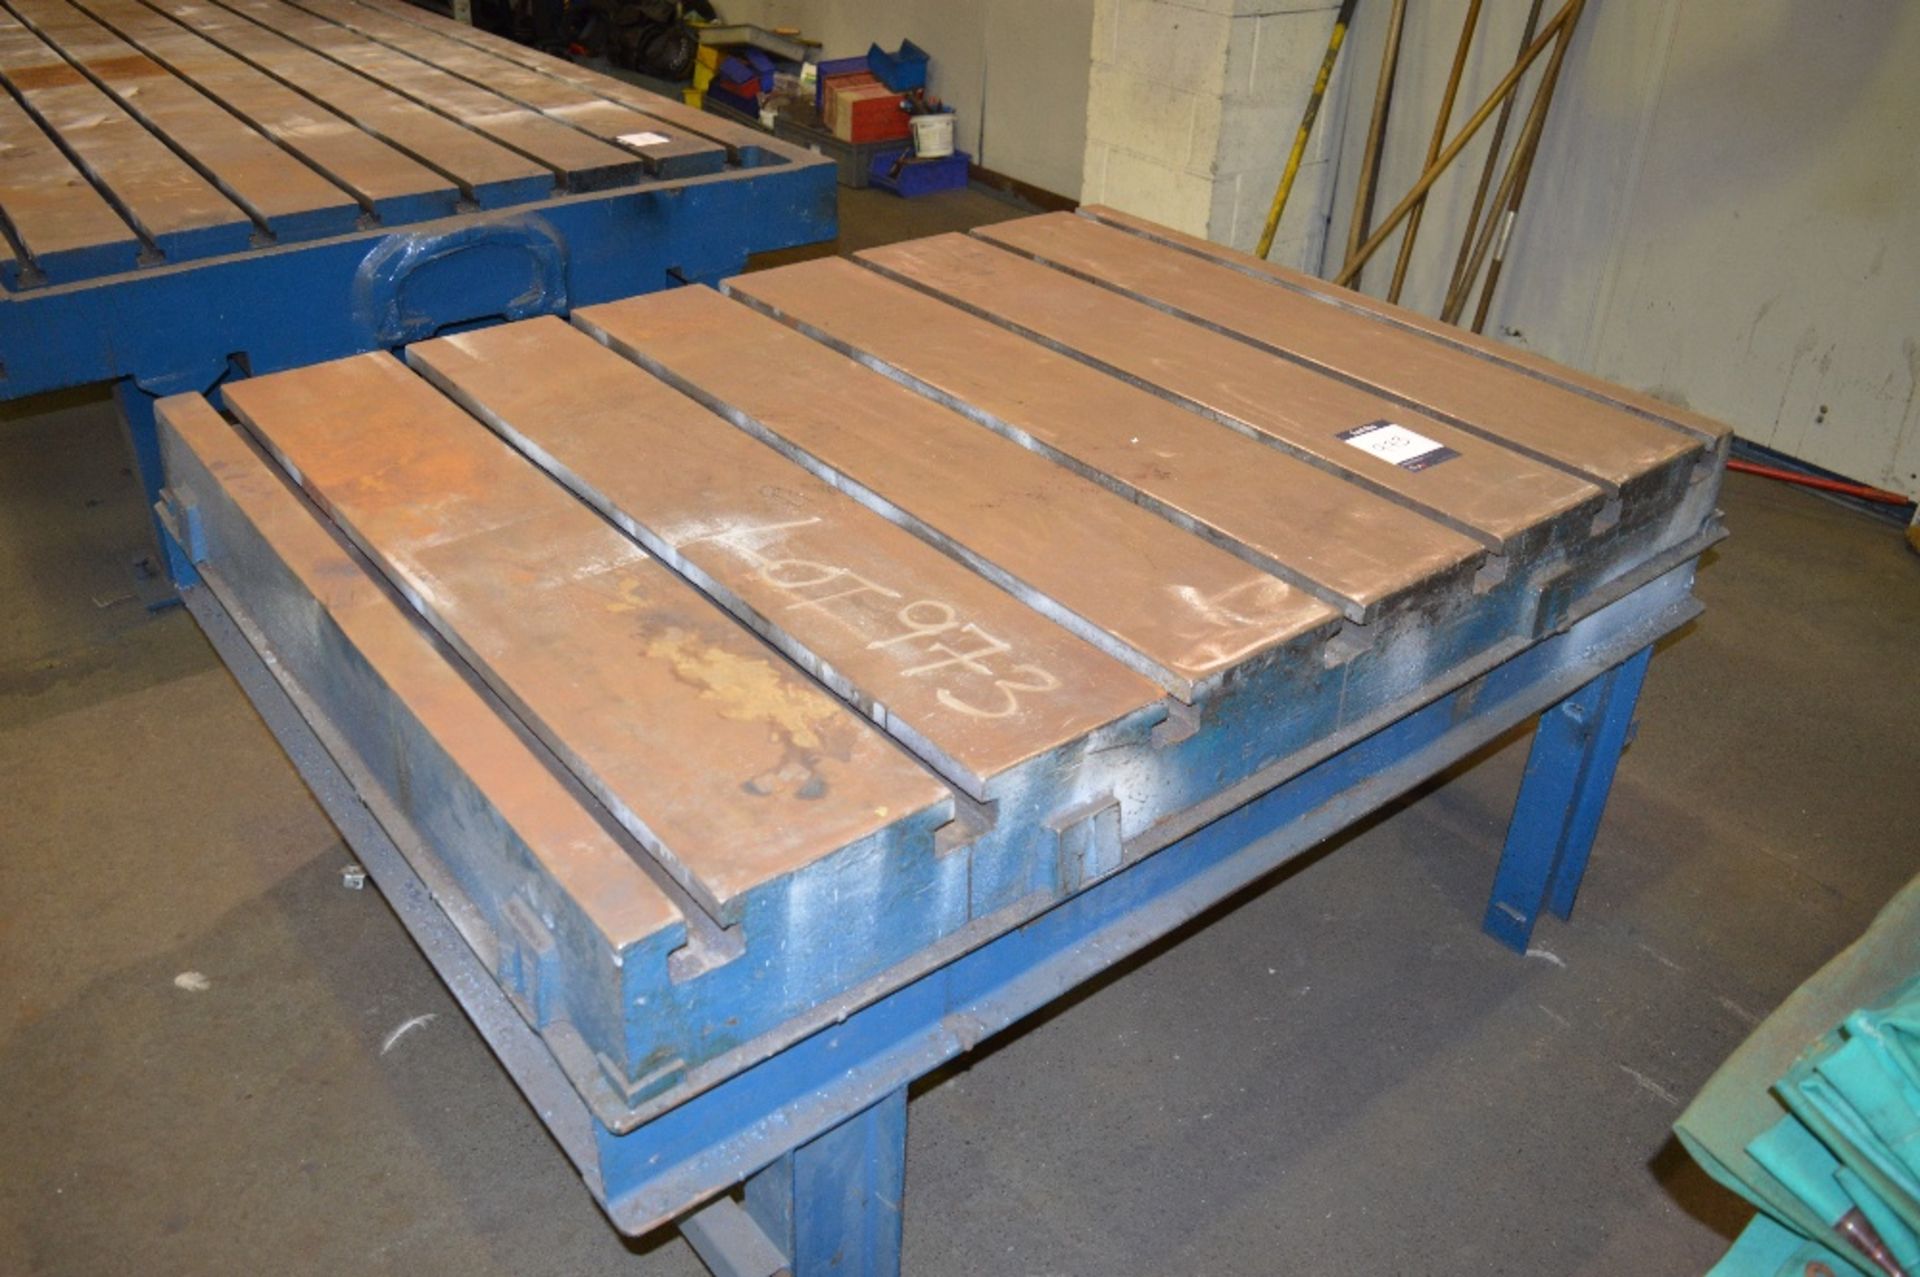 Steel Welding Bench
1.68m (w) x 1.26m (d) x 0.80m